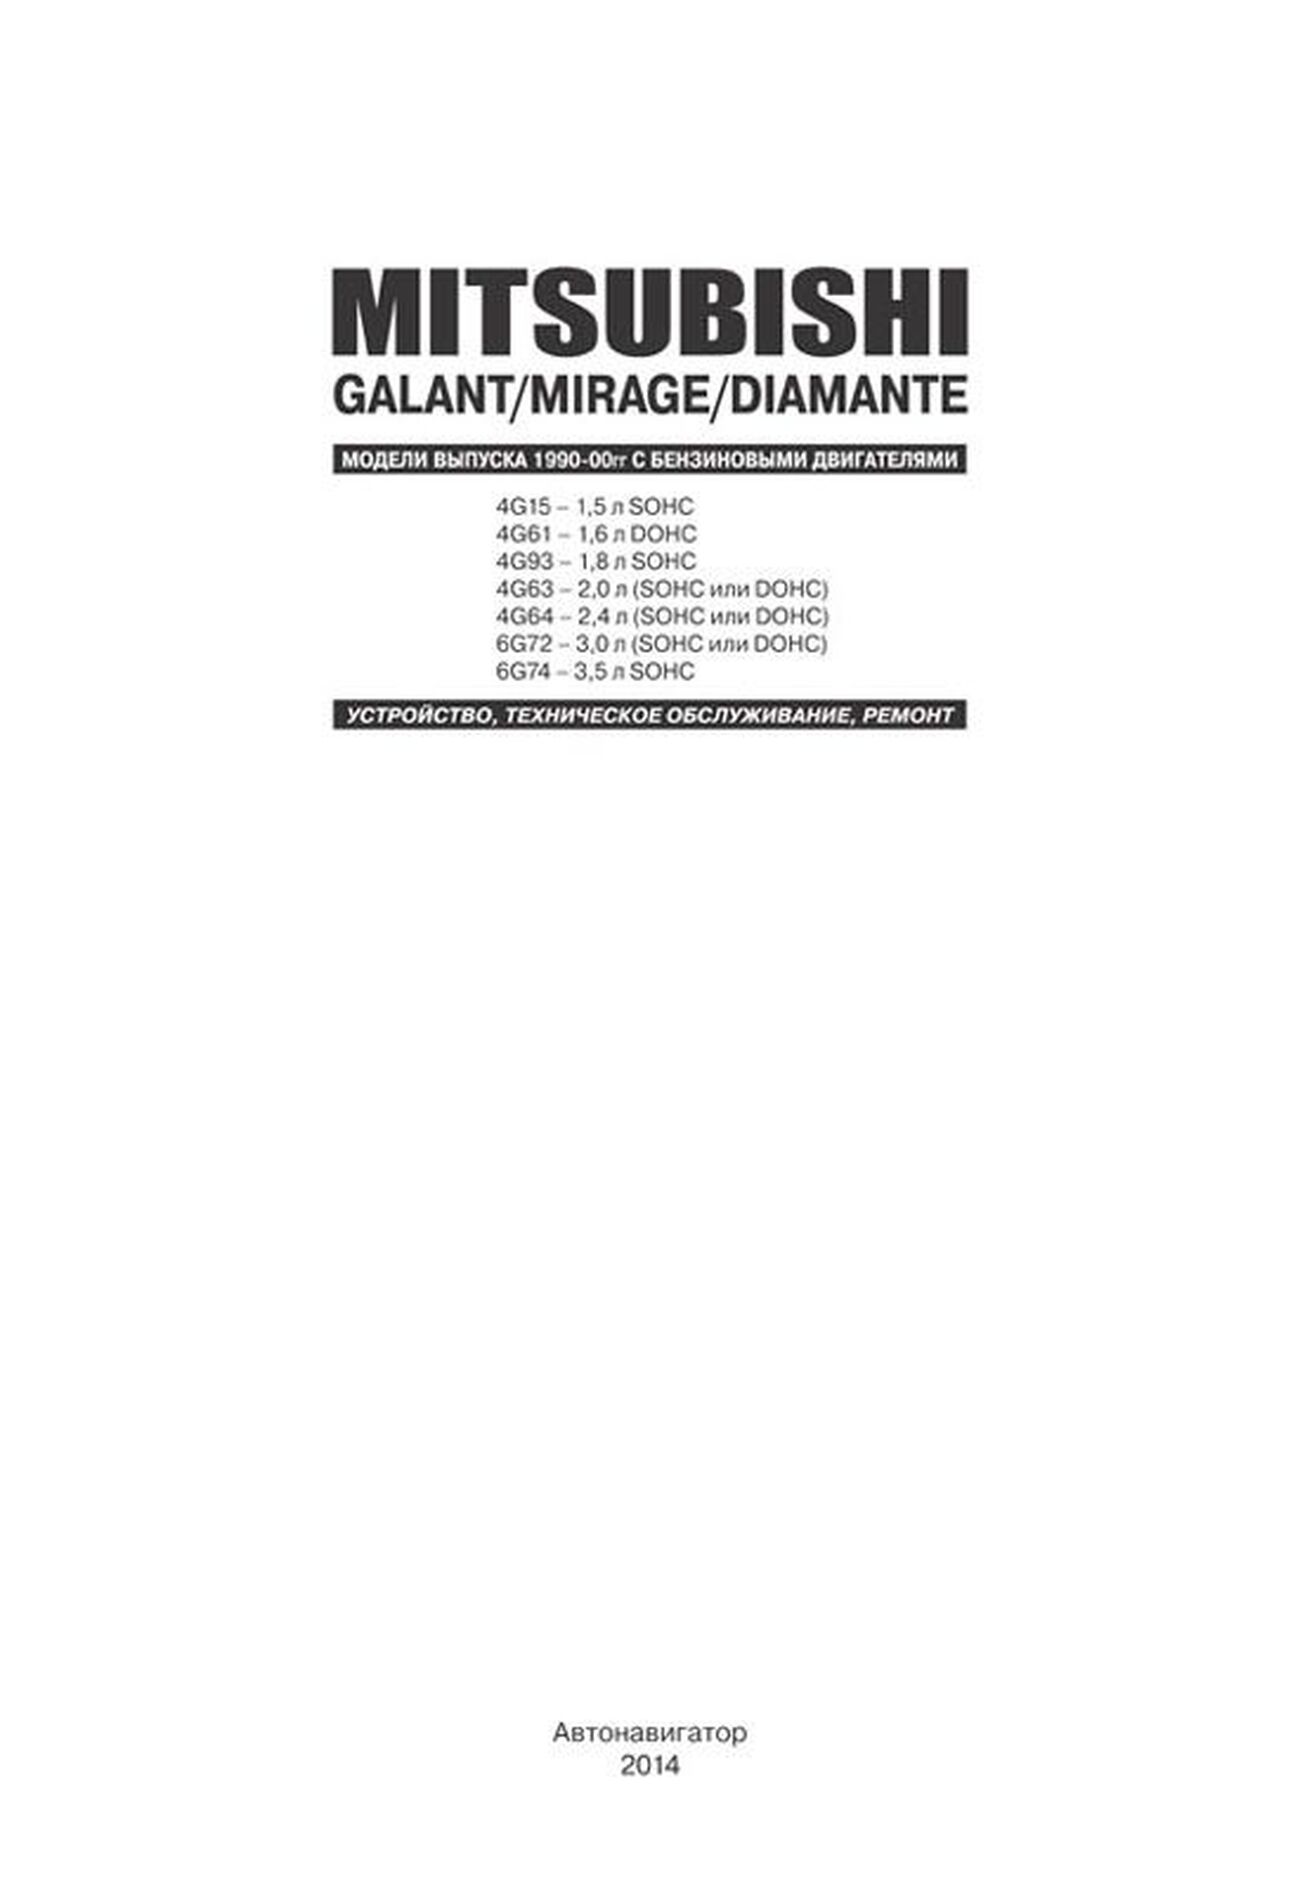 Книга: MITSUBISHI GALANT / MIRAGE / DIAMANTE (б) 1990-2000 г.в., рем., экспл., то | Автонавигатор